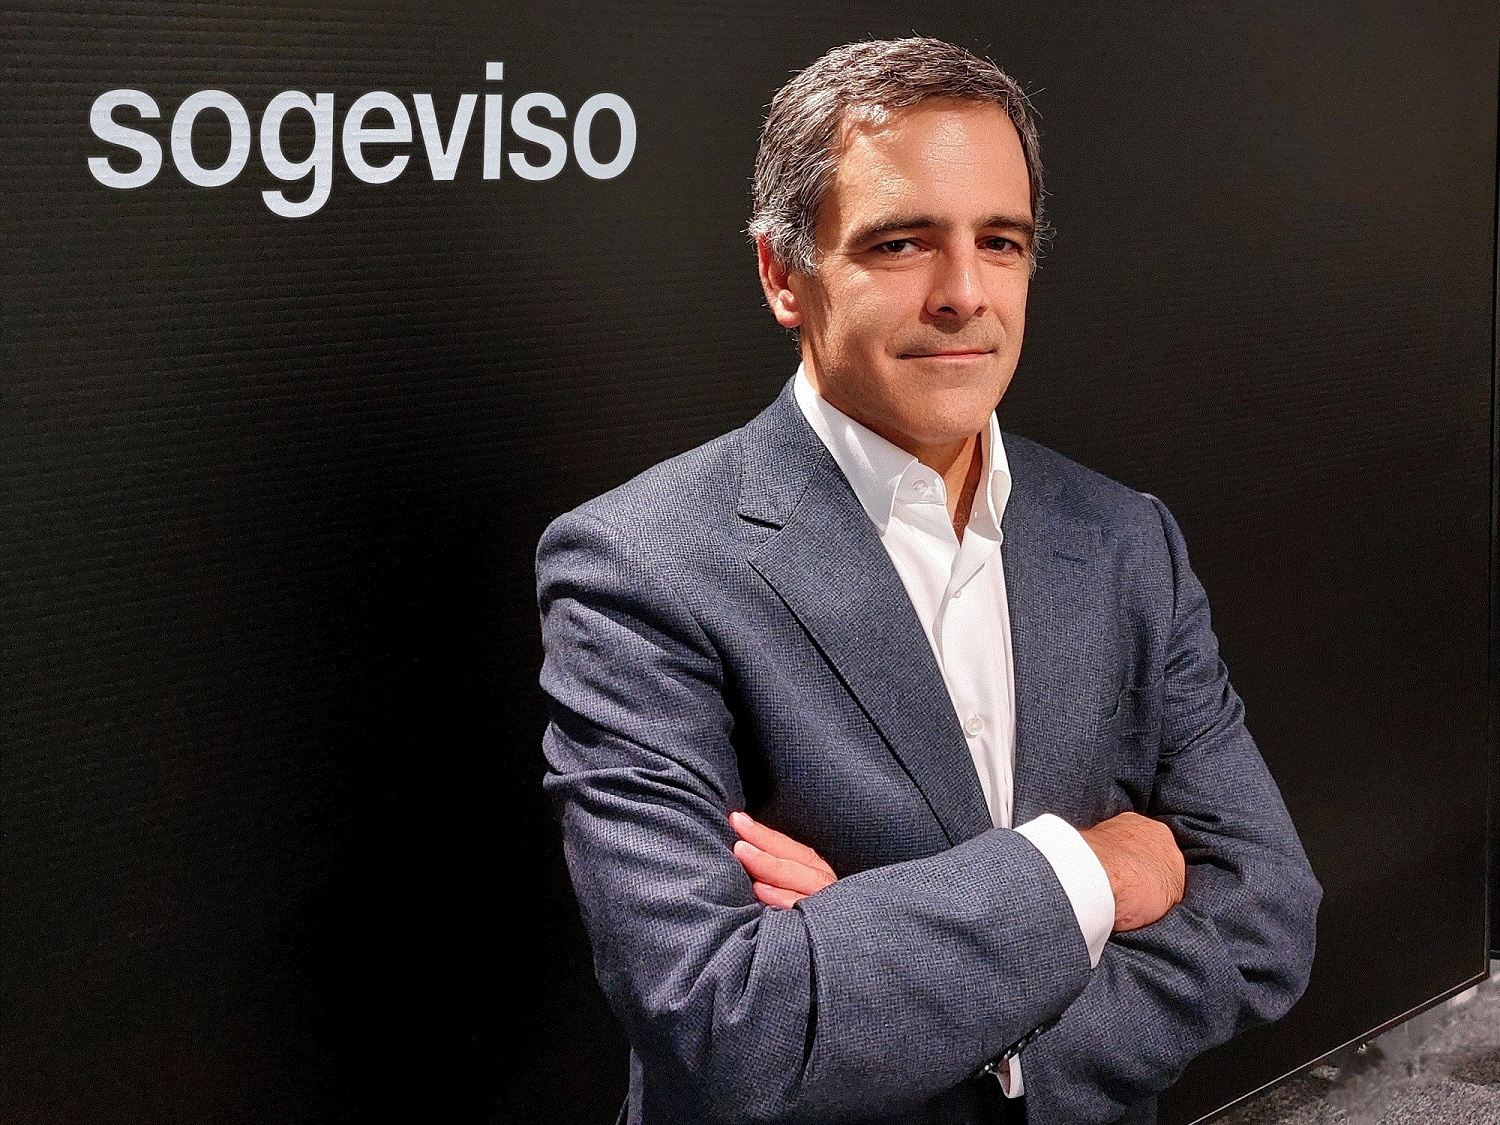 Sogeviso’s Board of Directors appoints Javier García del Río as the new General Manager